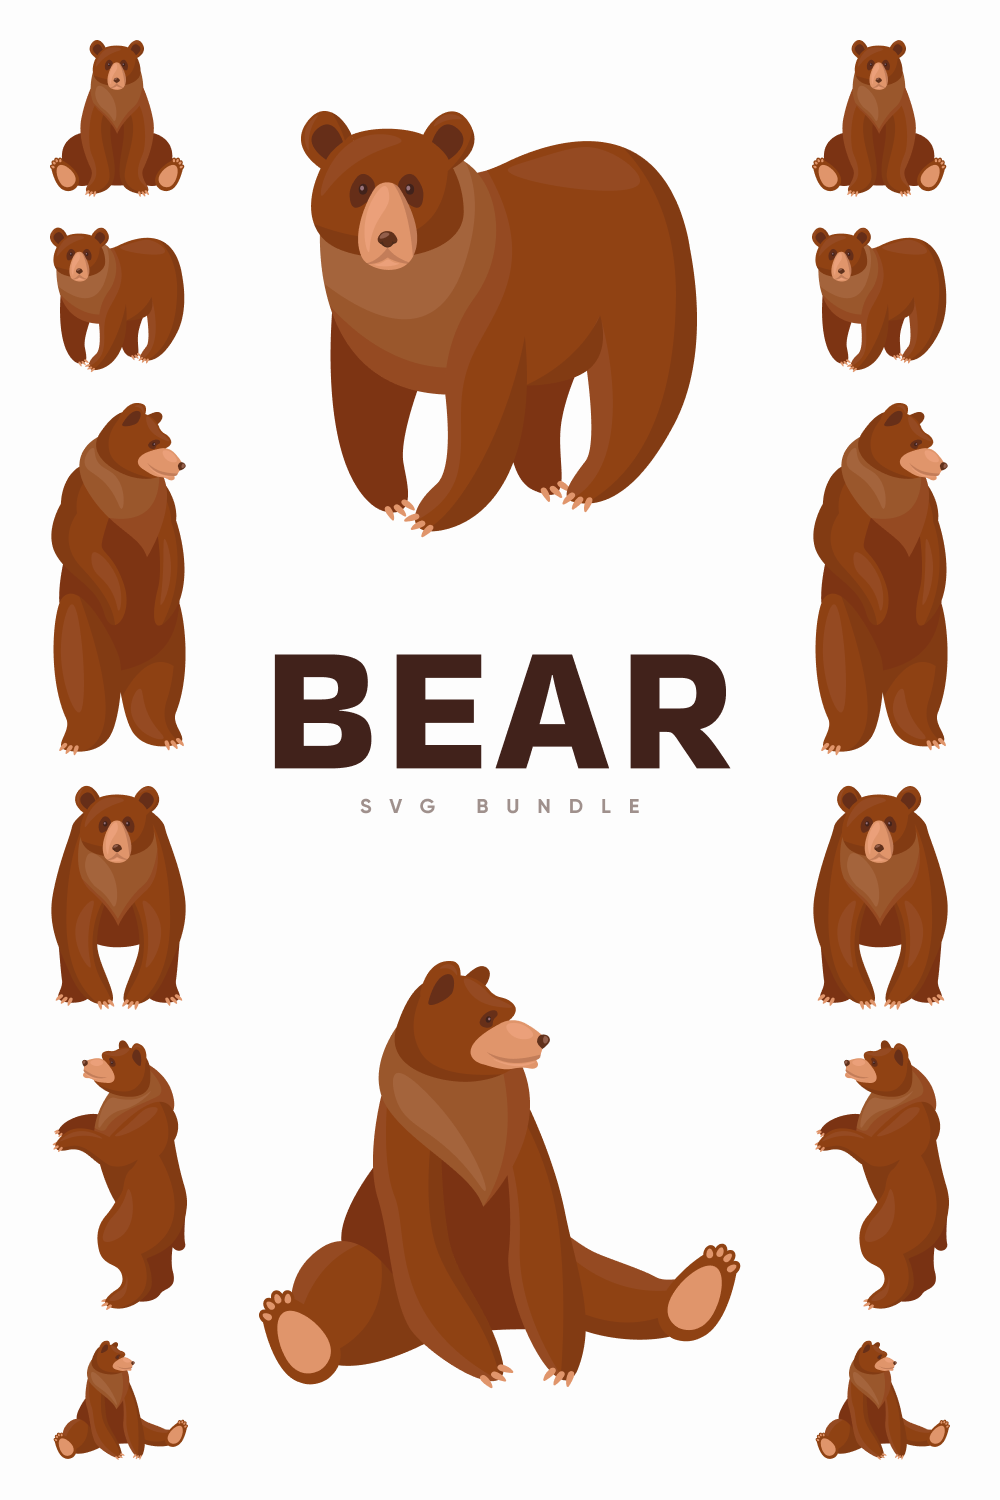 Bear SVG Files Bundle pinterest image.